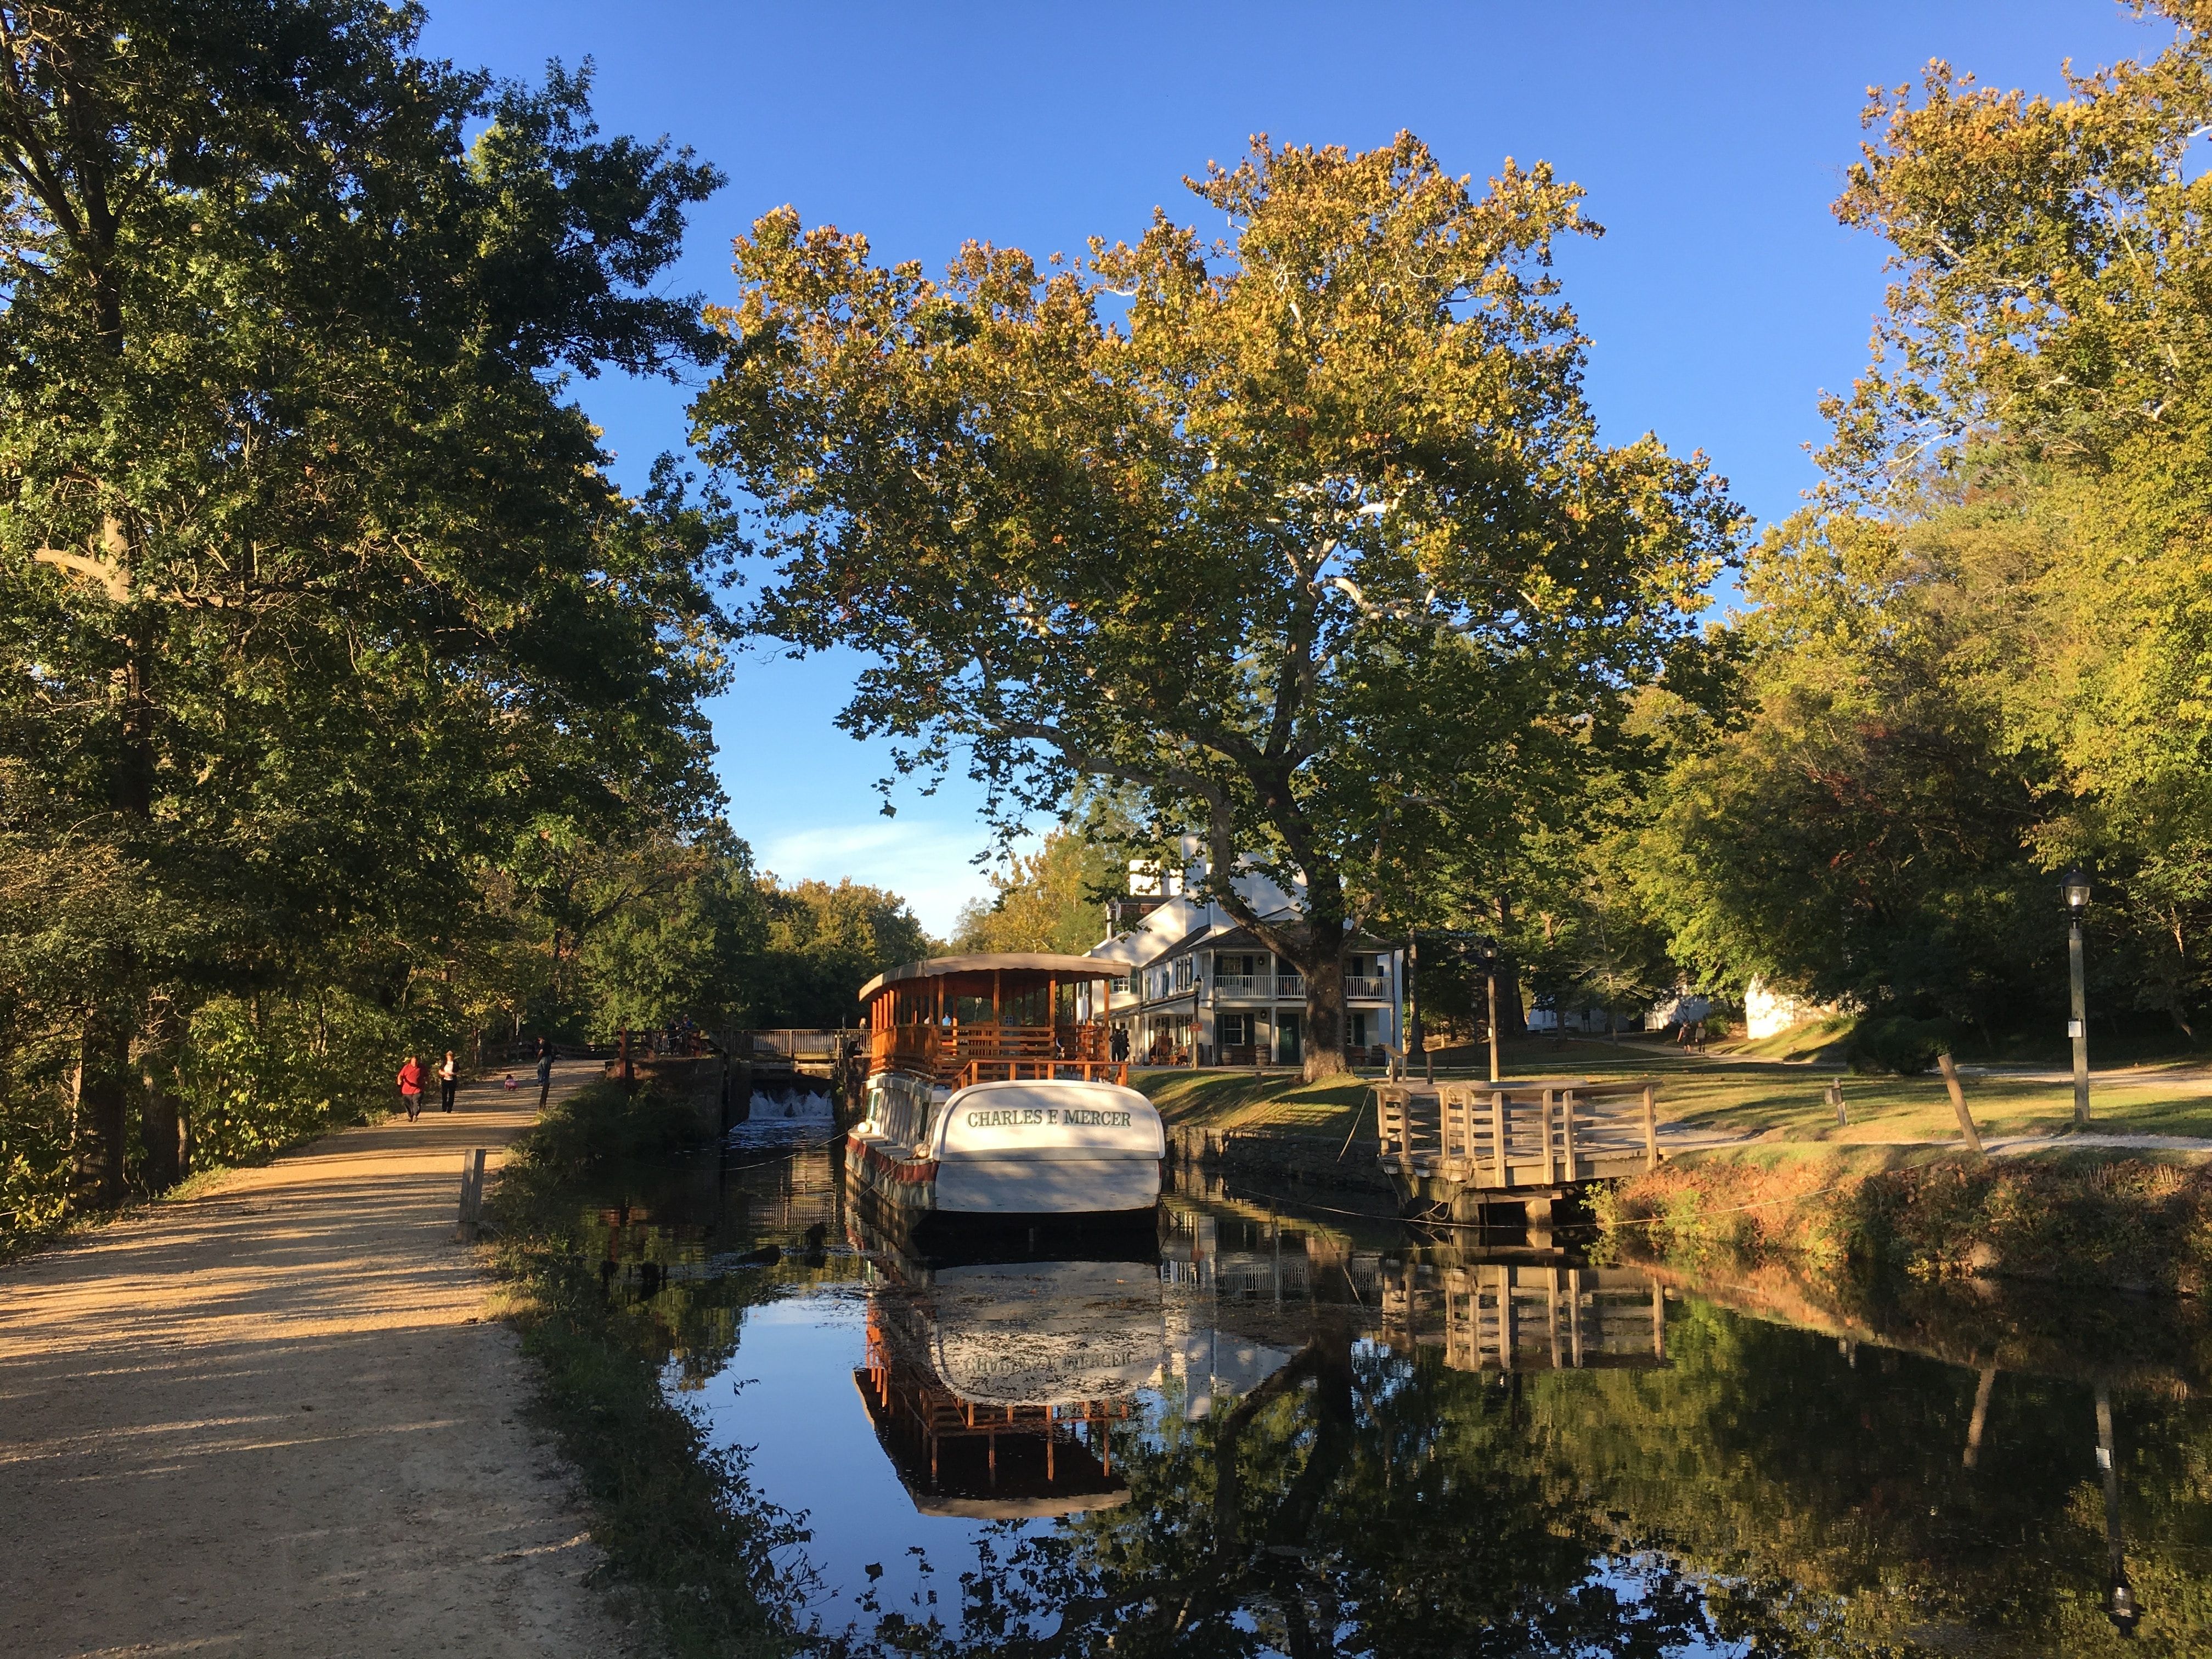  Chesapeake & Ohio Canal